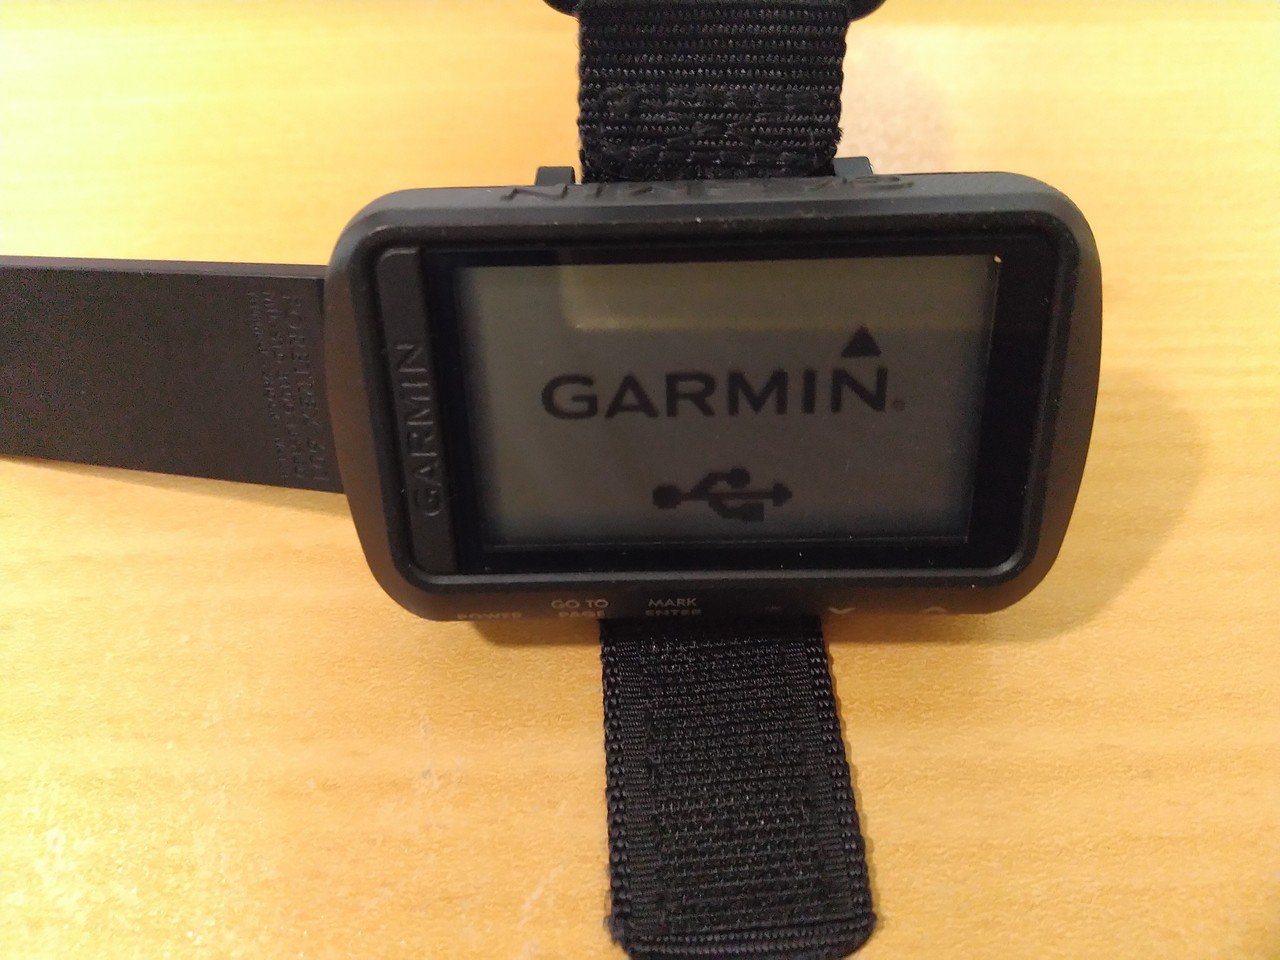 GARMIN foretrex 601 日本語版 - 登山用品